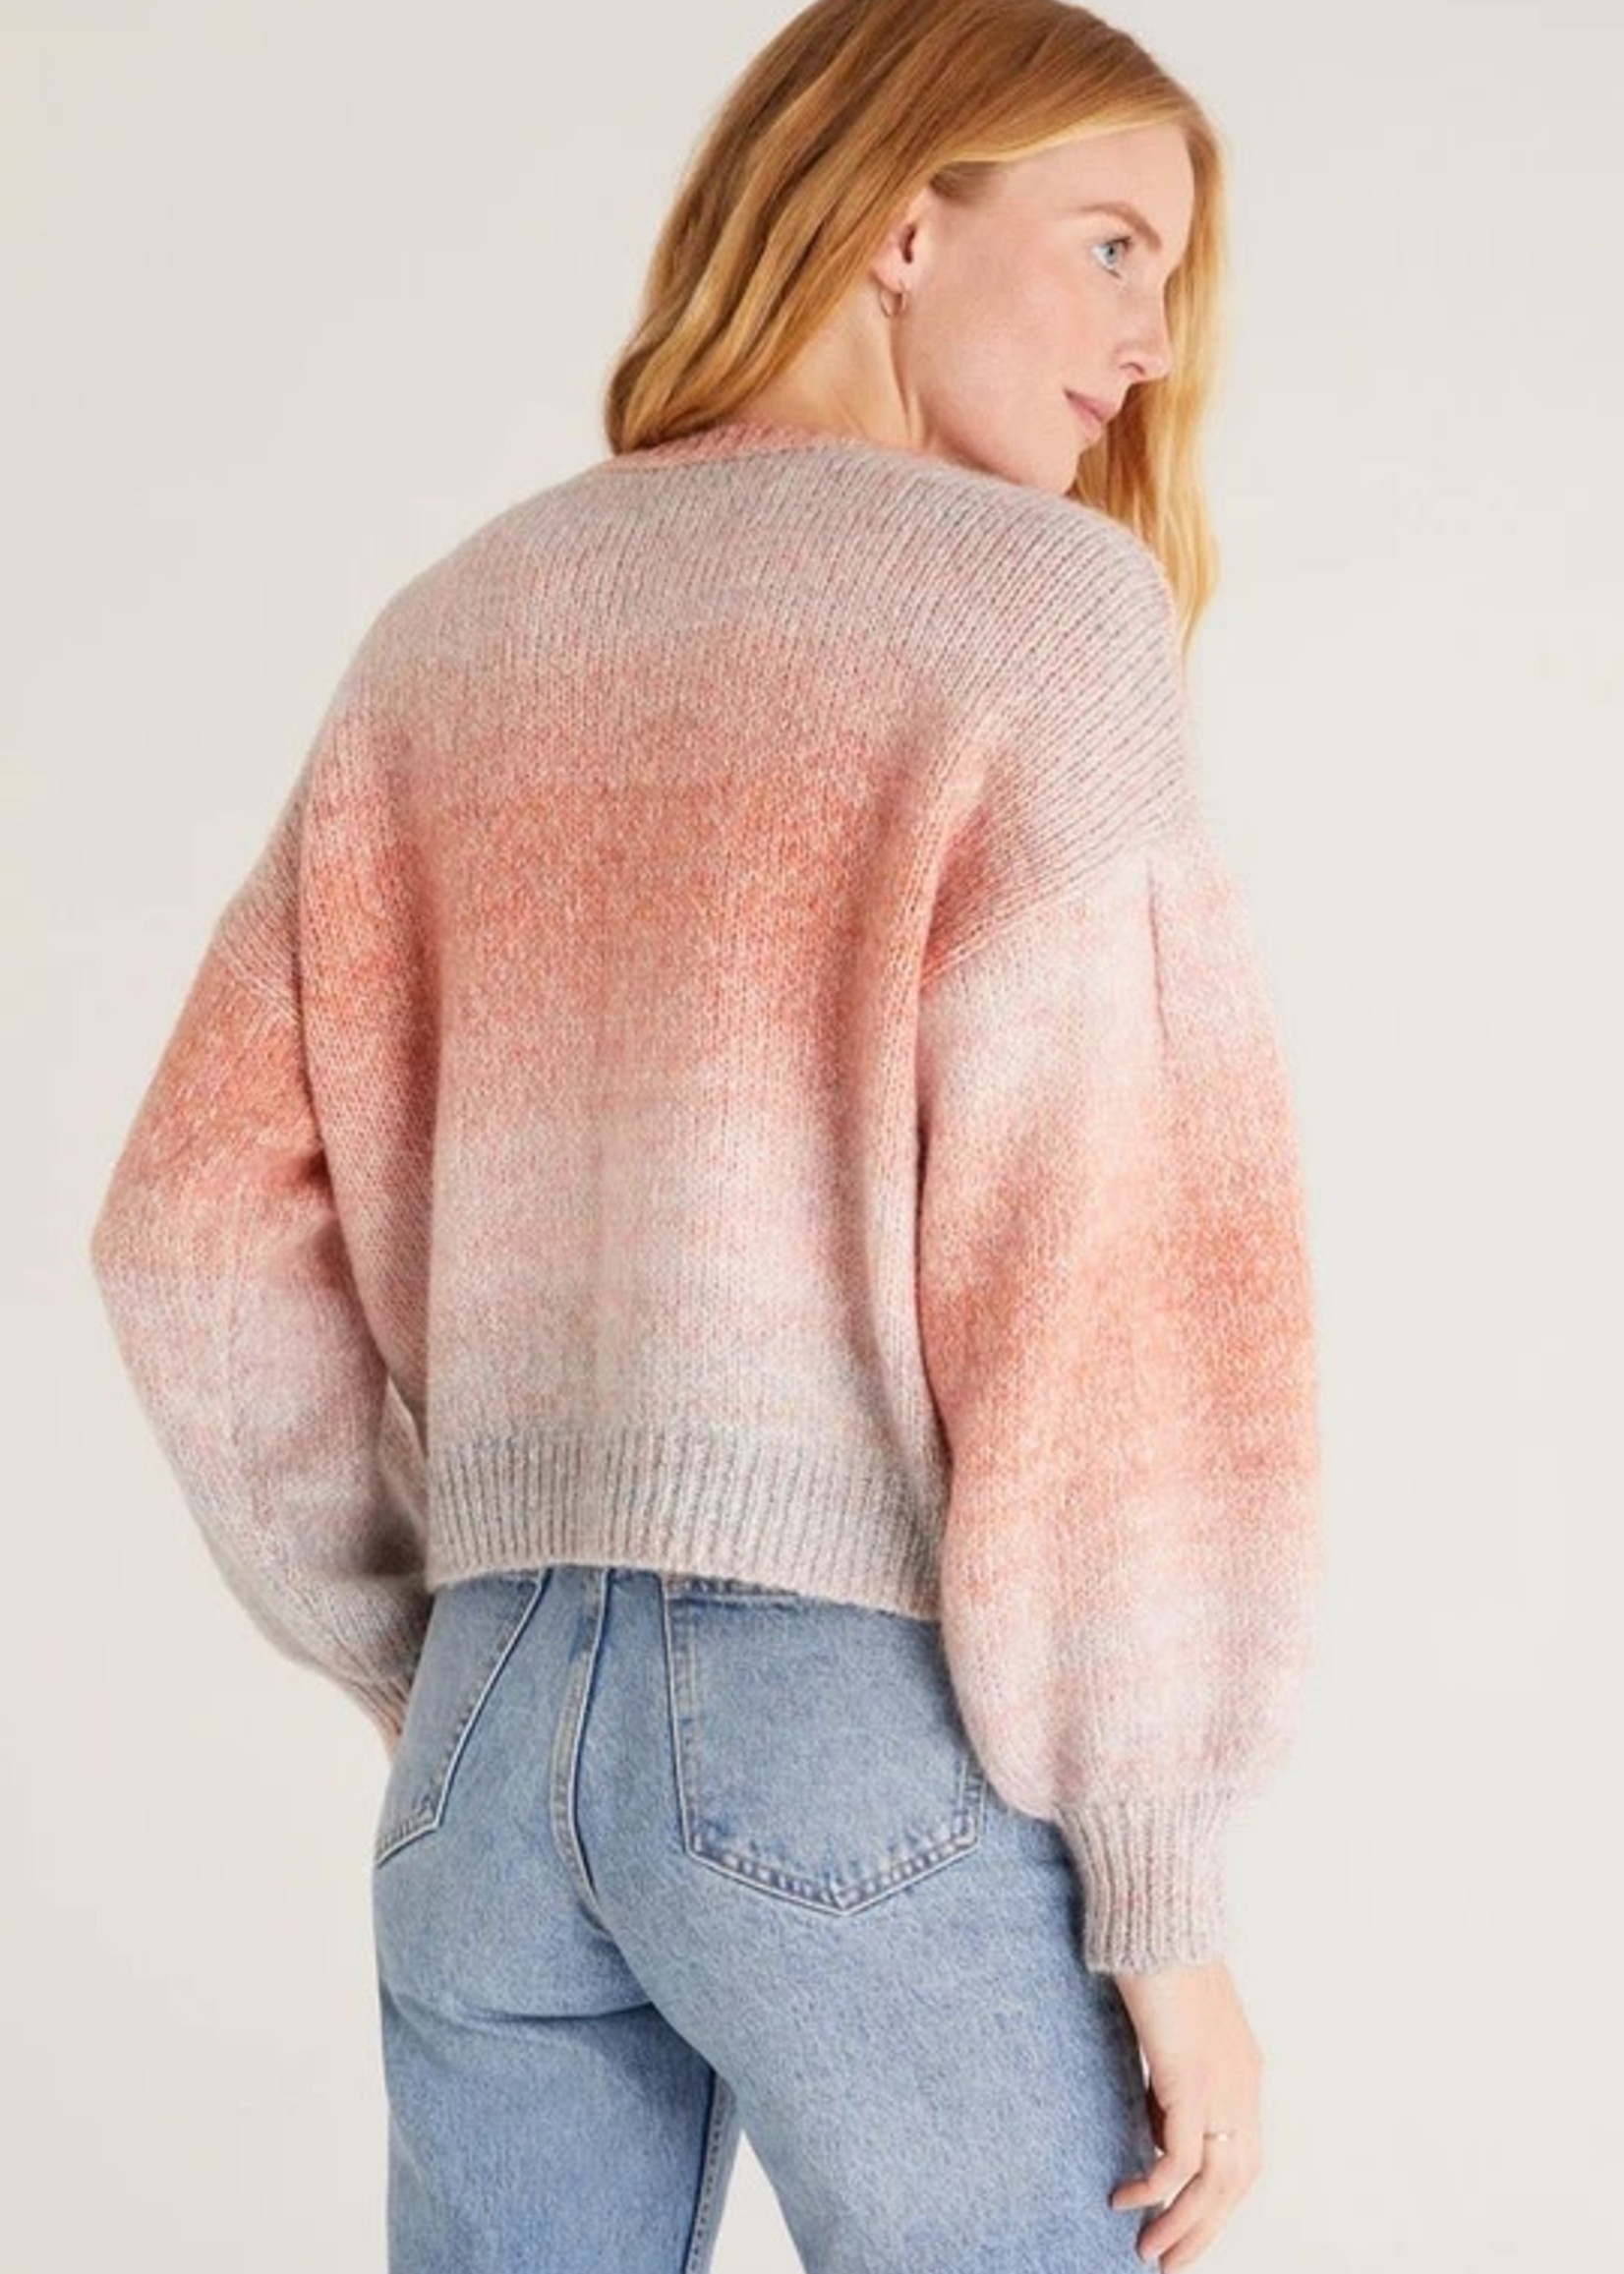 Z supply Kersa Ombre Sweater